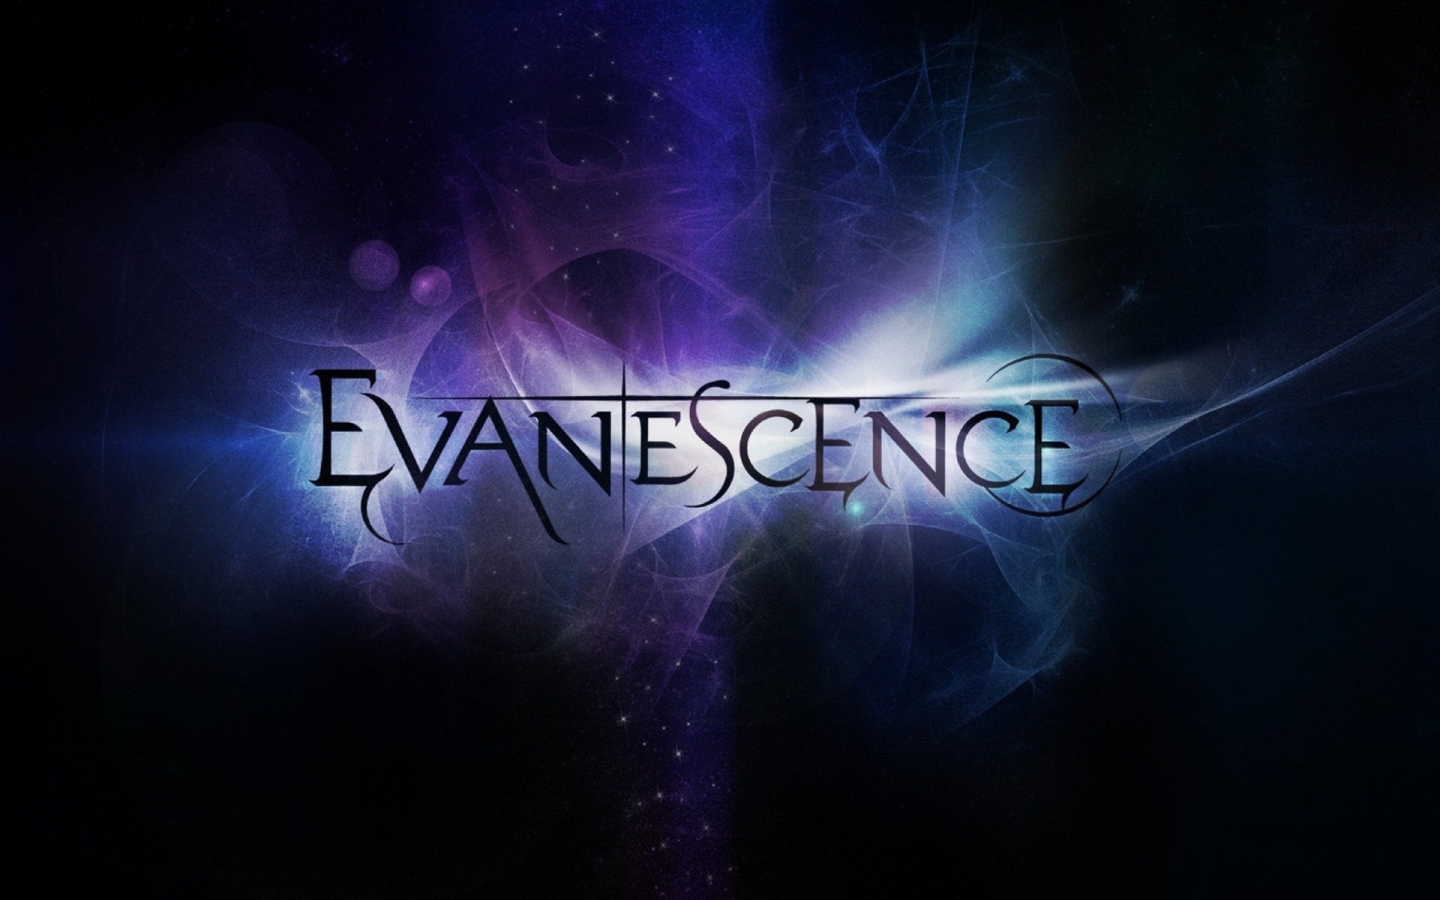 Evanescence Logo for 1440 x 900 widescreen resolution